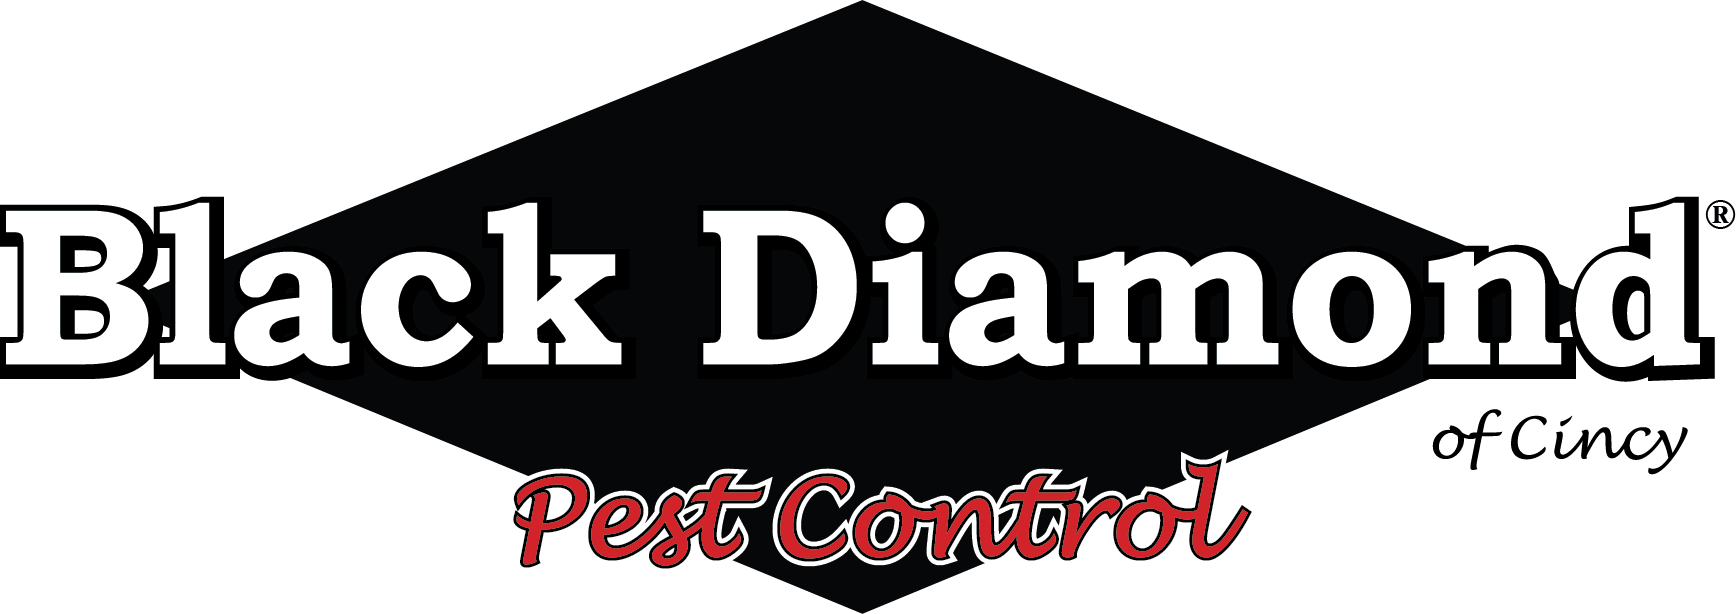 Black Diamond of Cincinnati, LLC Logo